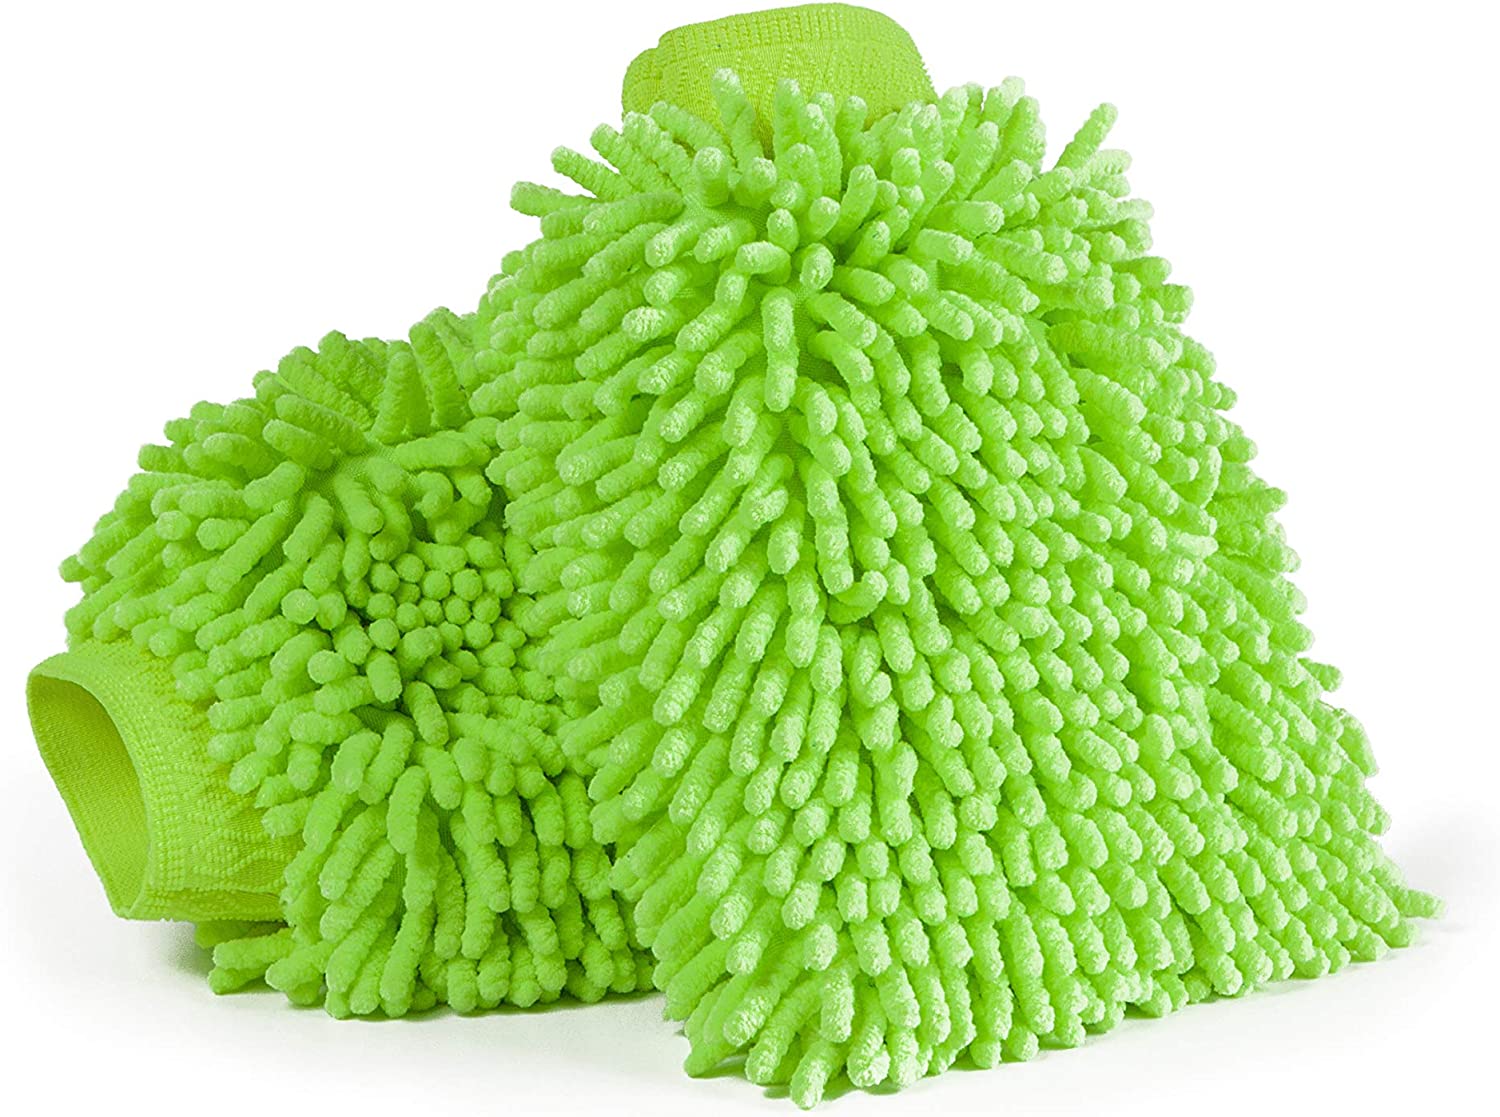 Car Wash Glove Chenille Coral Soft Microfiber Gloves